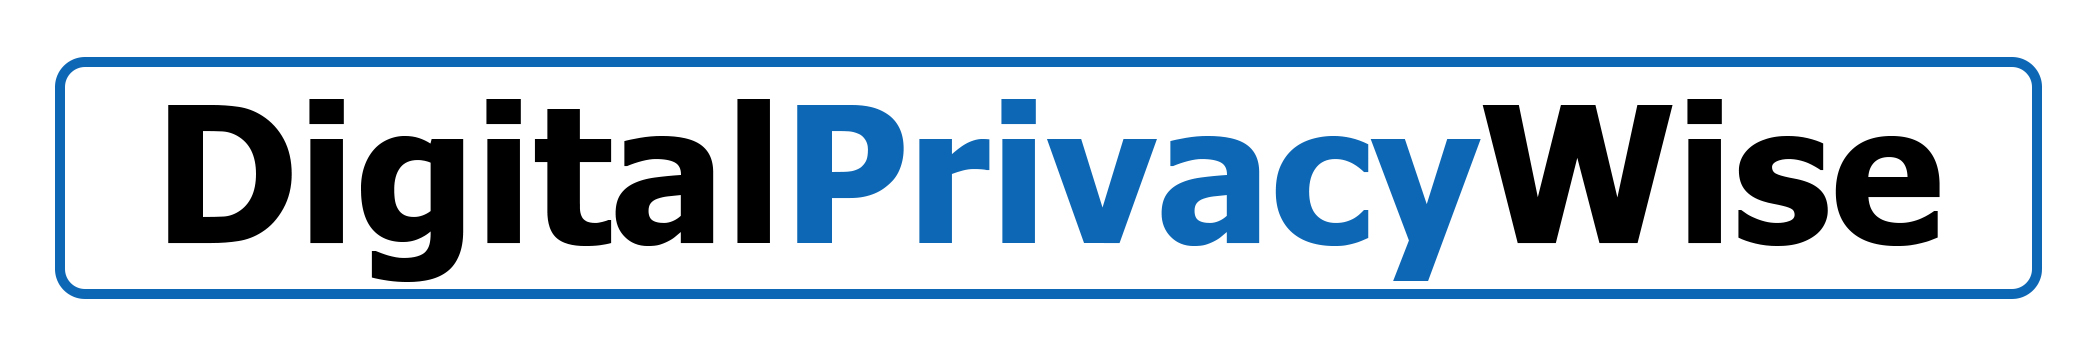 Digital Privacy Wise Logo Wide